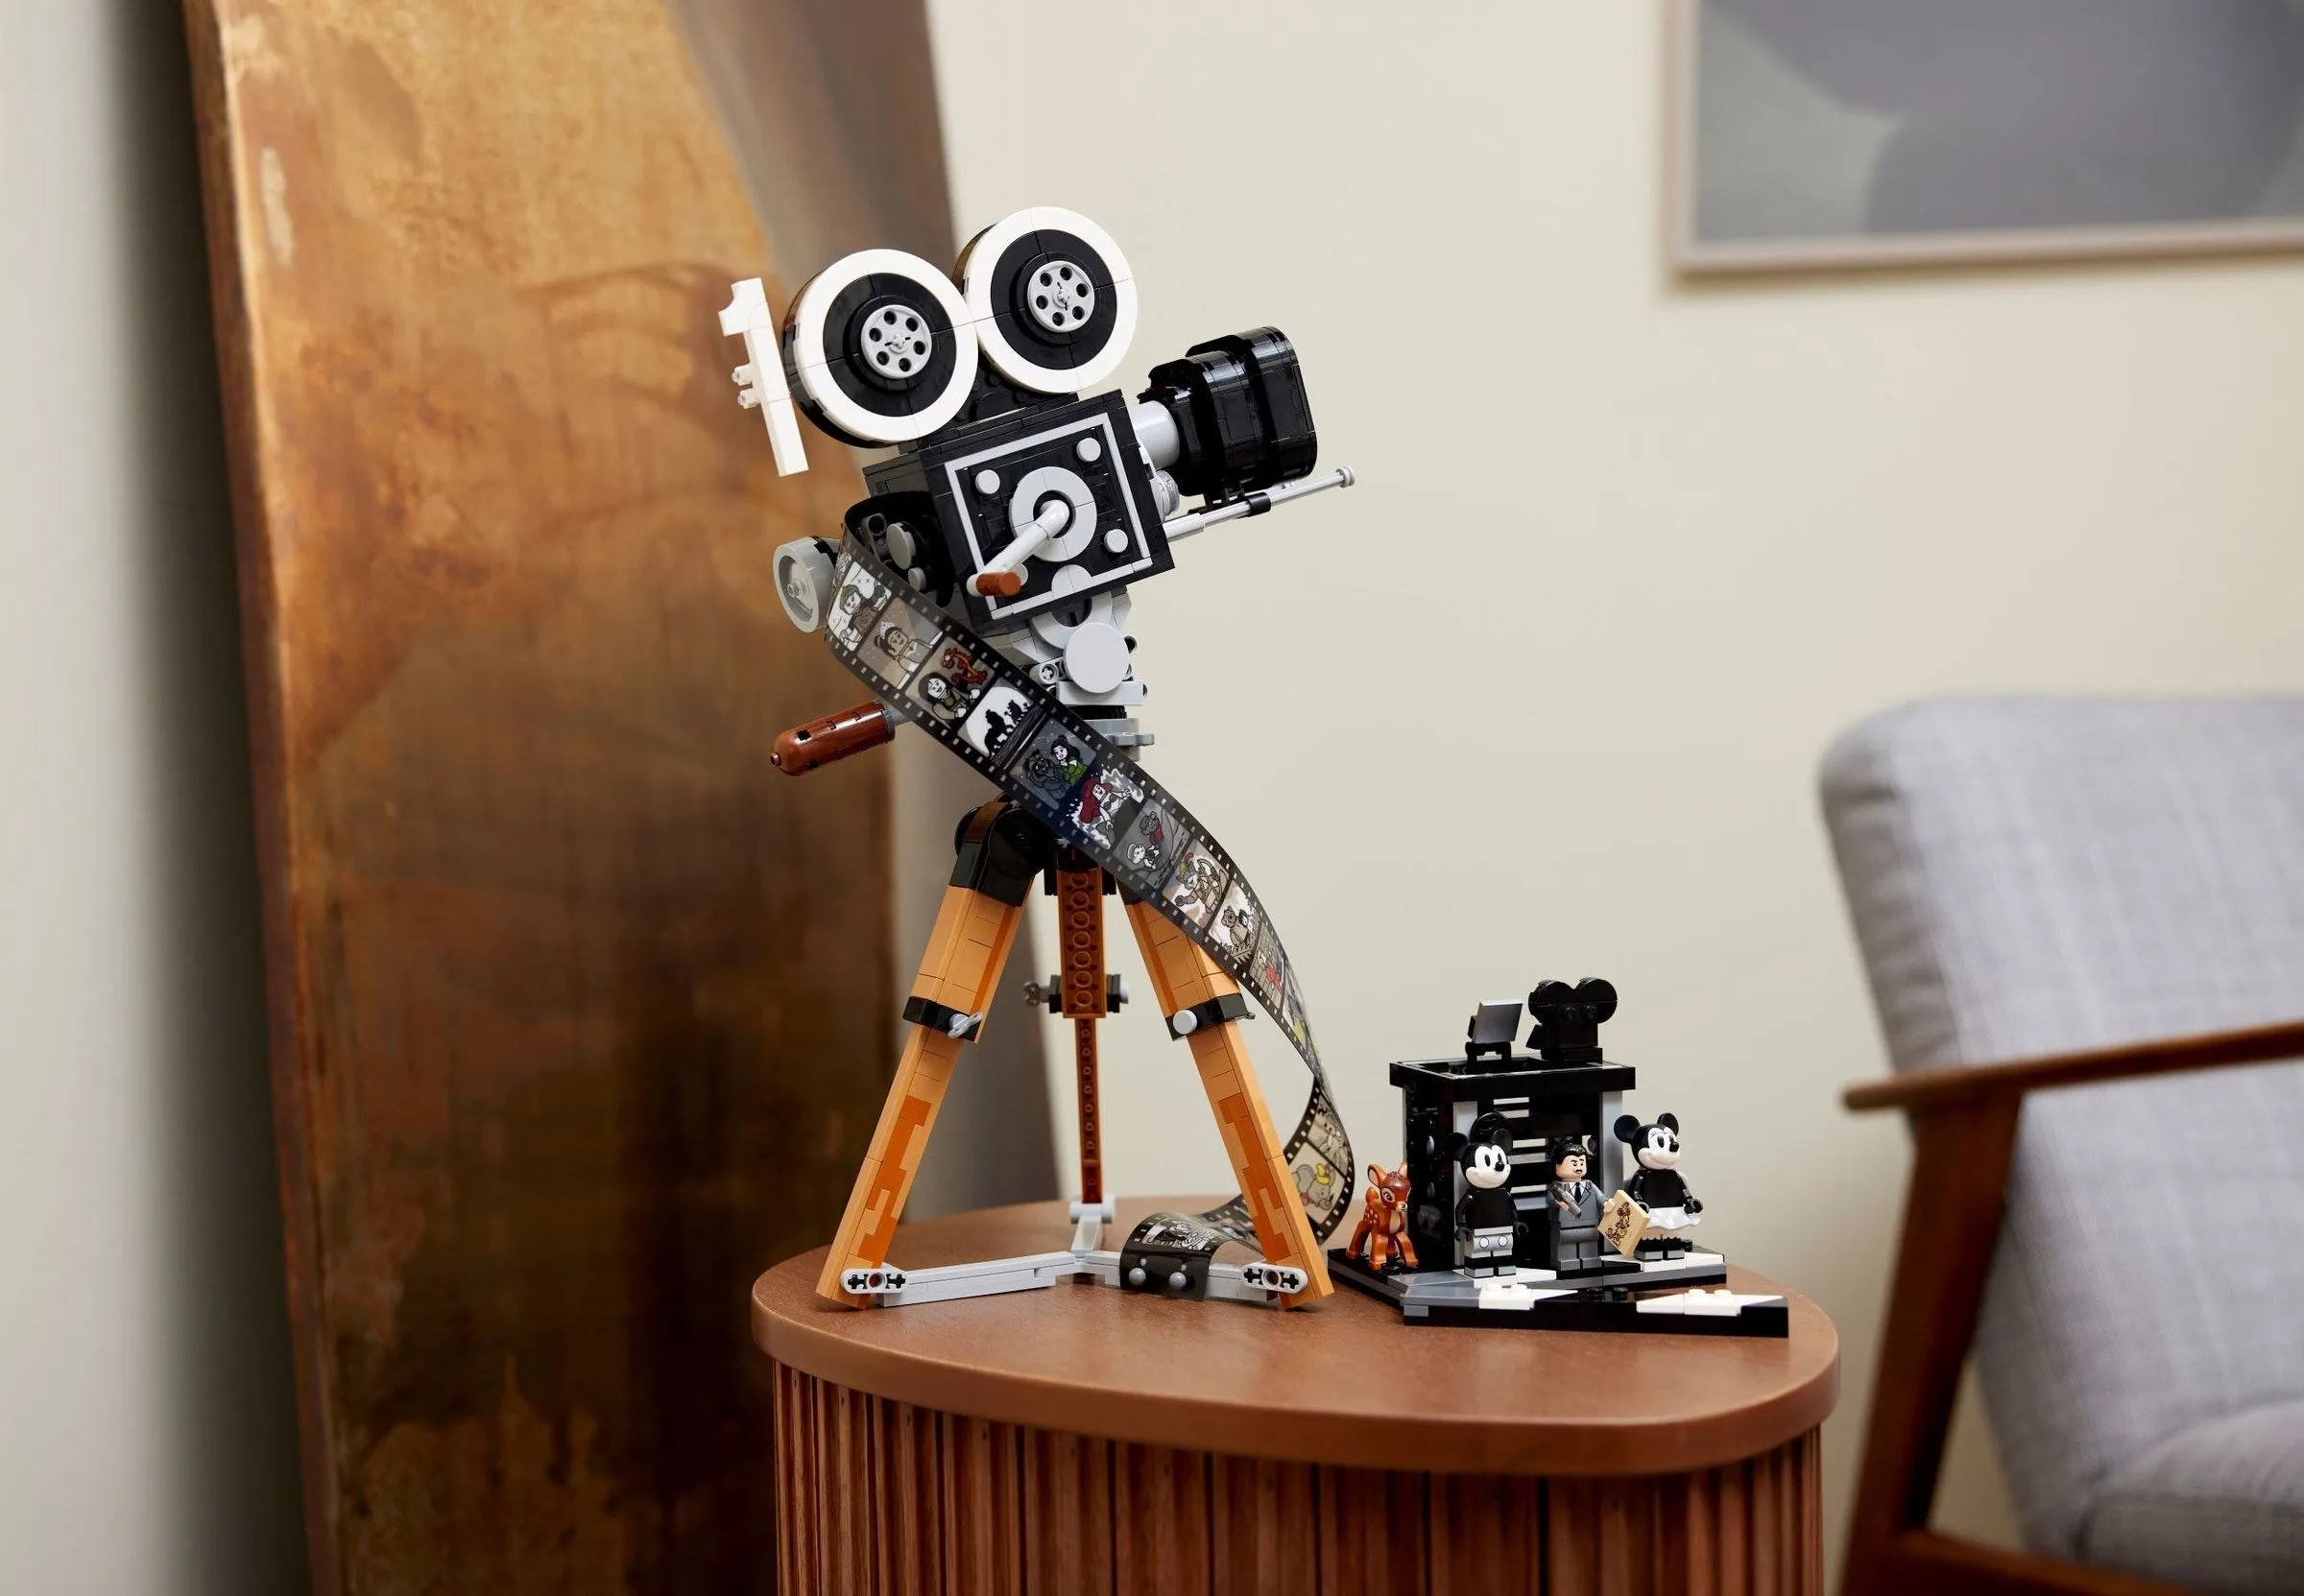 LEGO Walt Disney Tribute Camera set